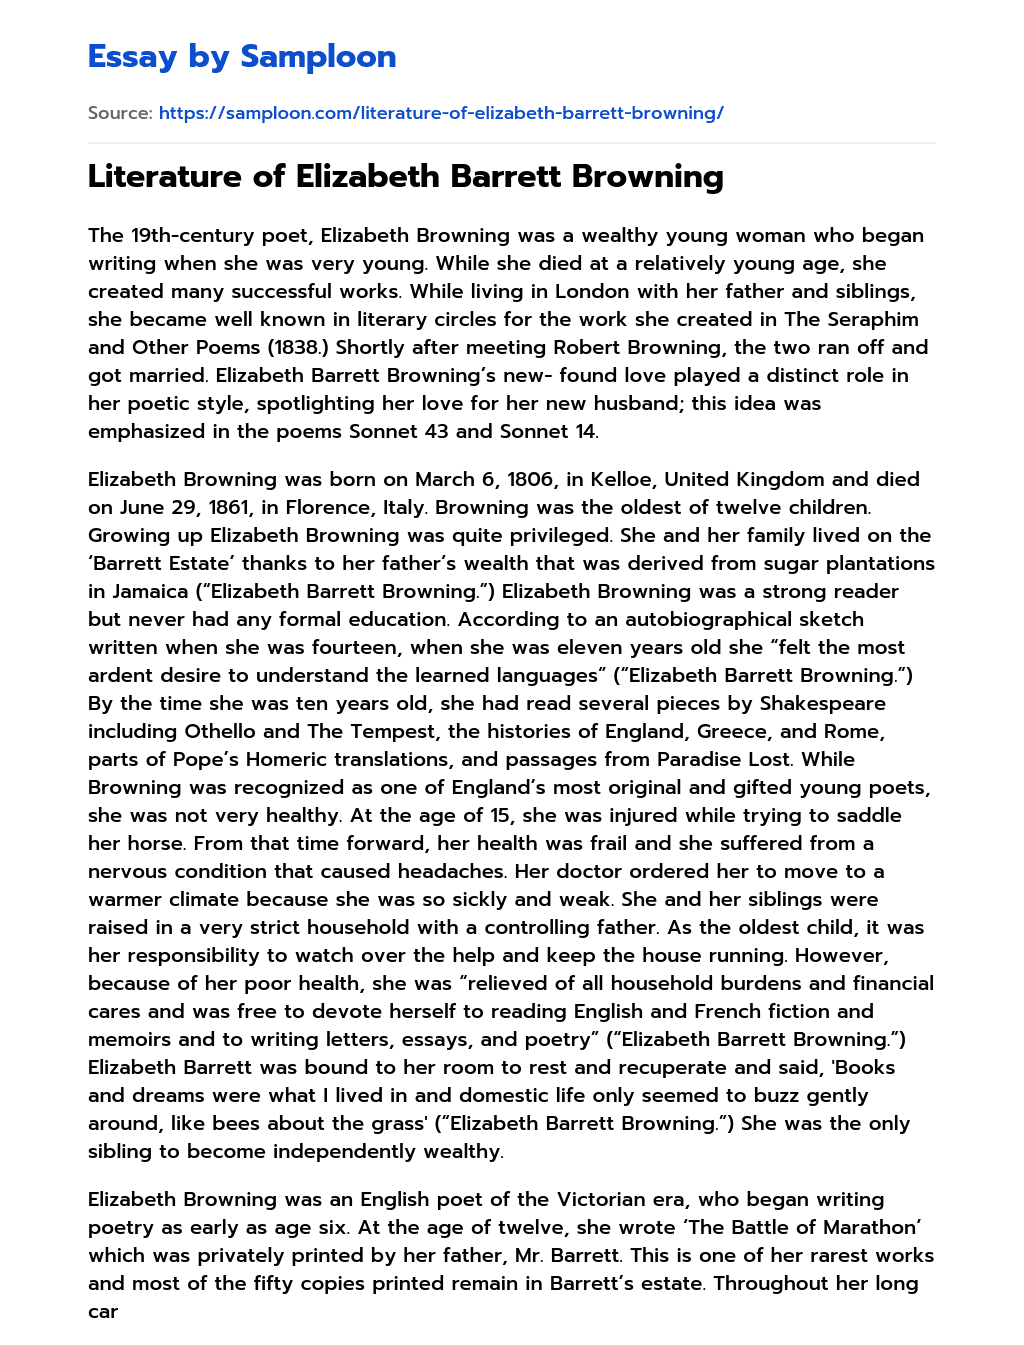 Literature of Elizabeth Barrett Browning Analytical Essay essay